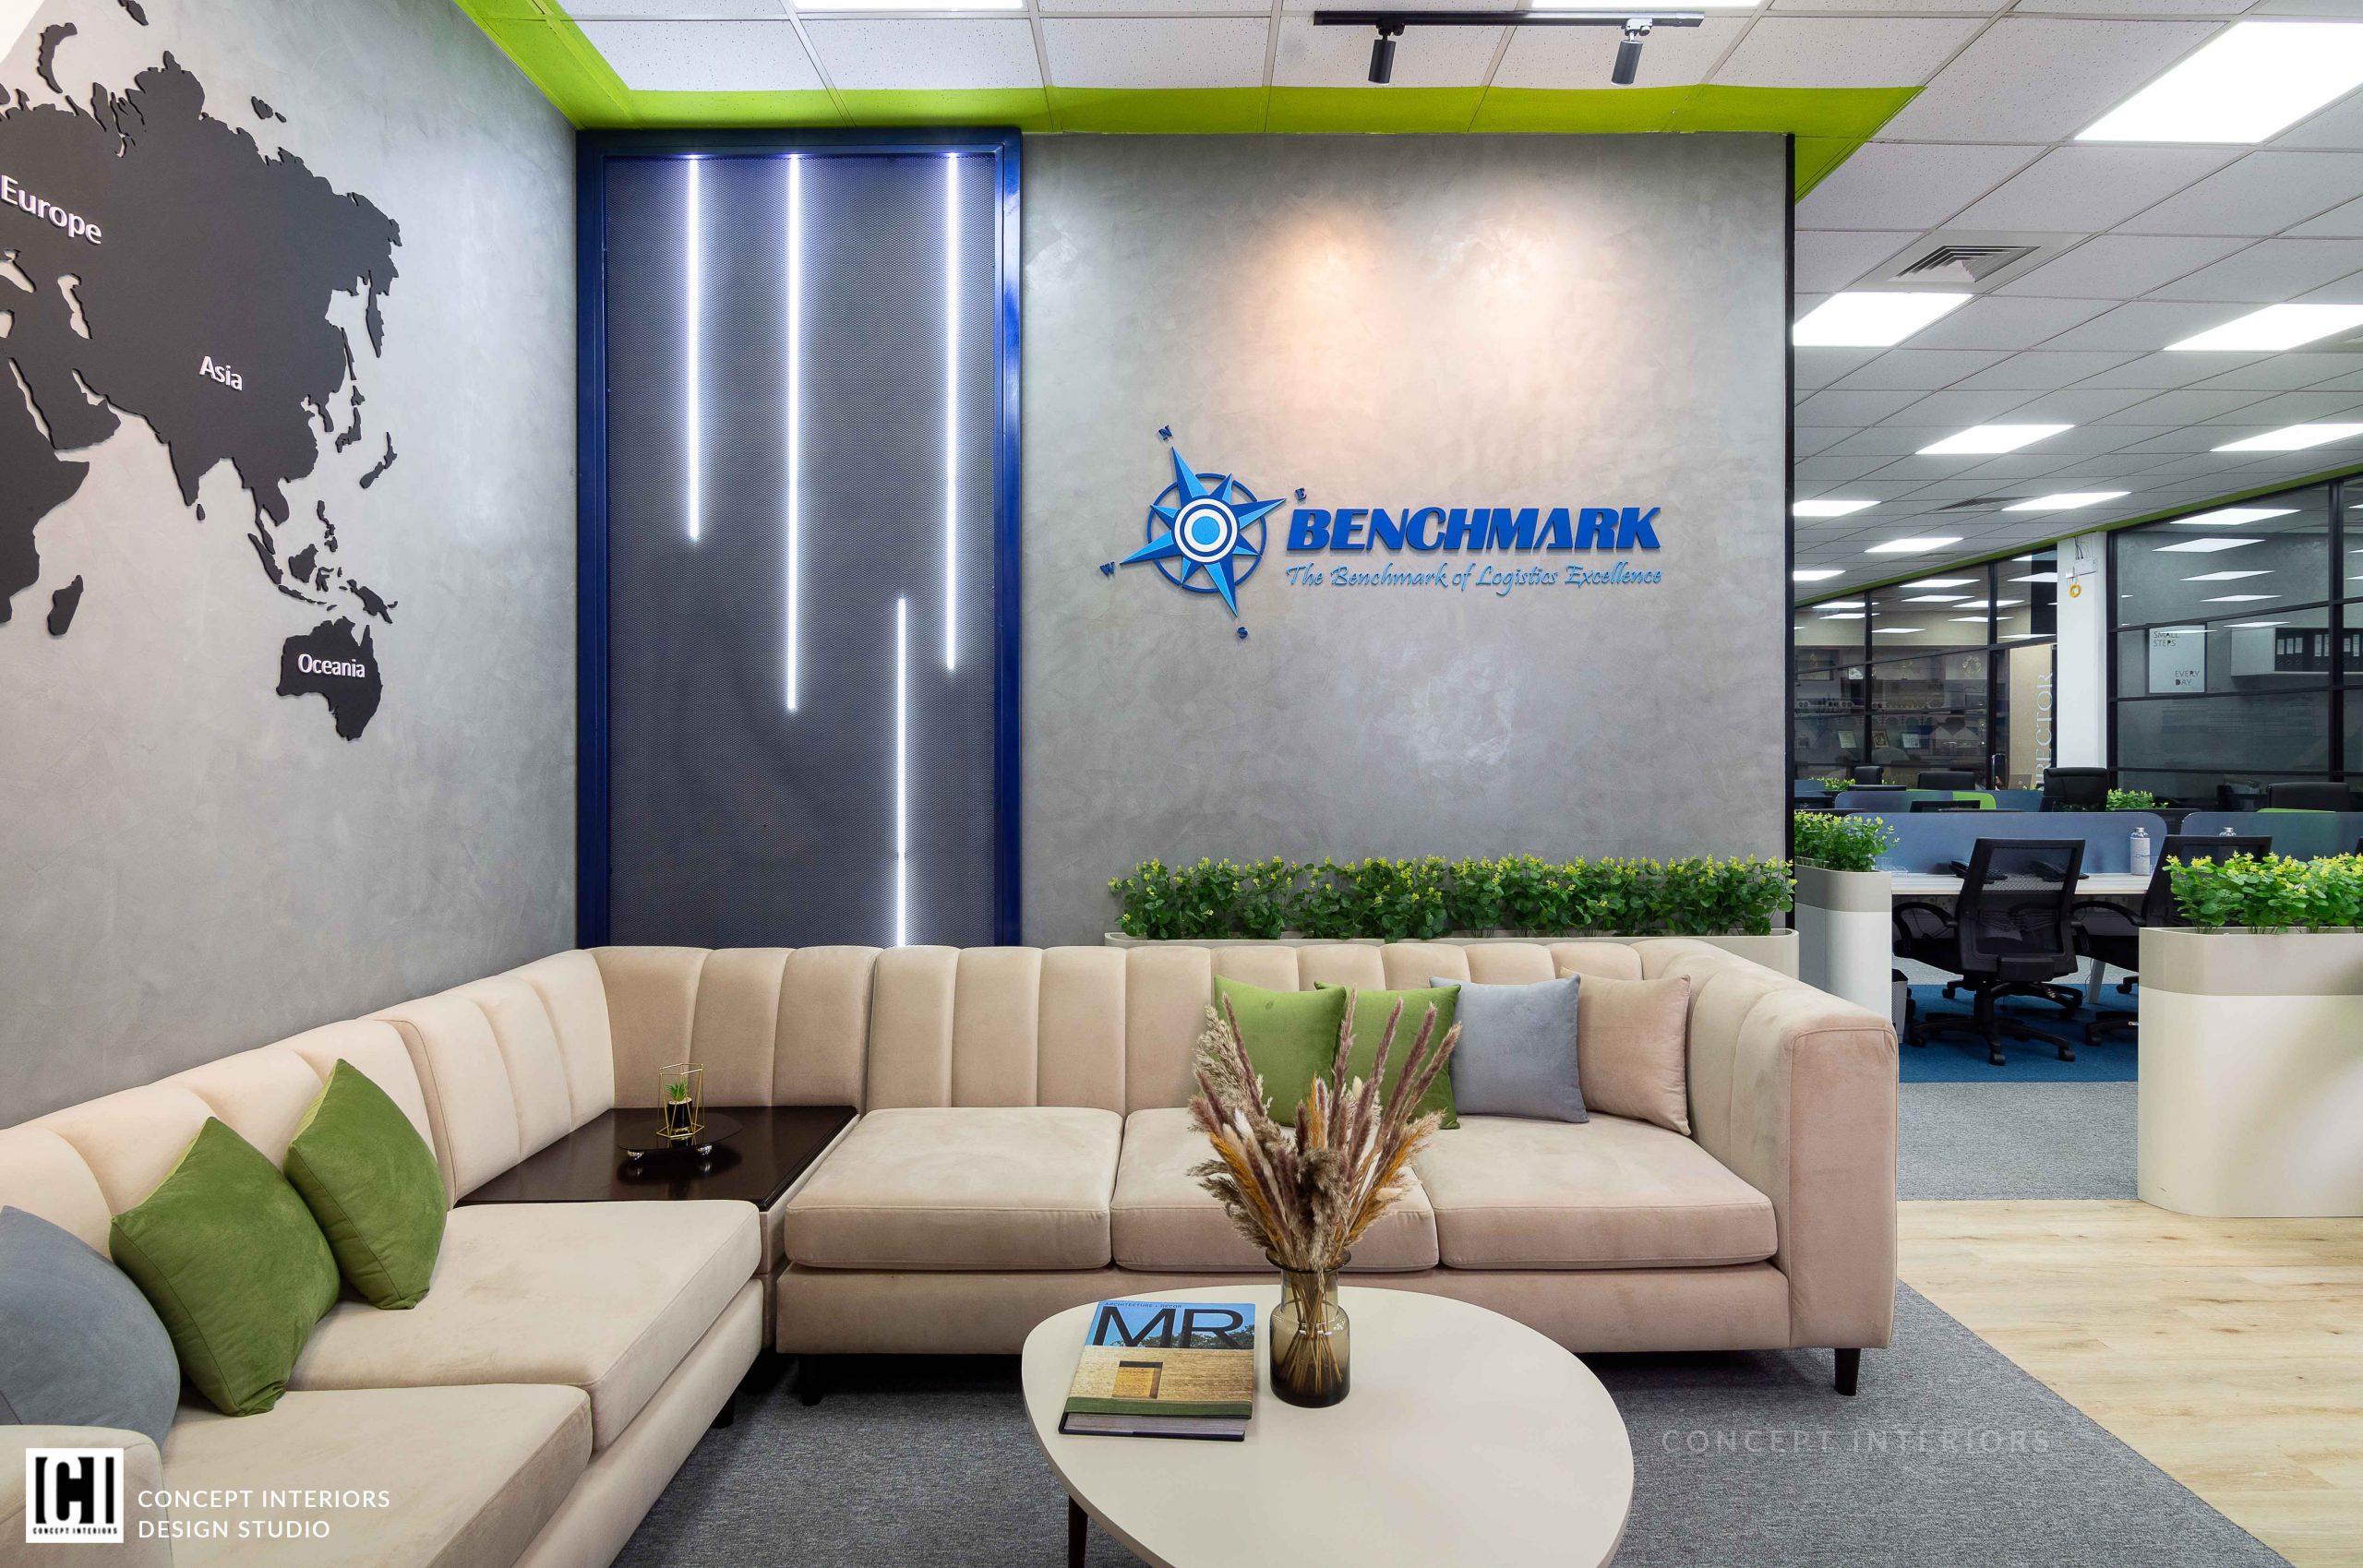 Benchmark Logistics Head office interior design